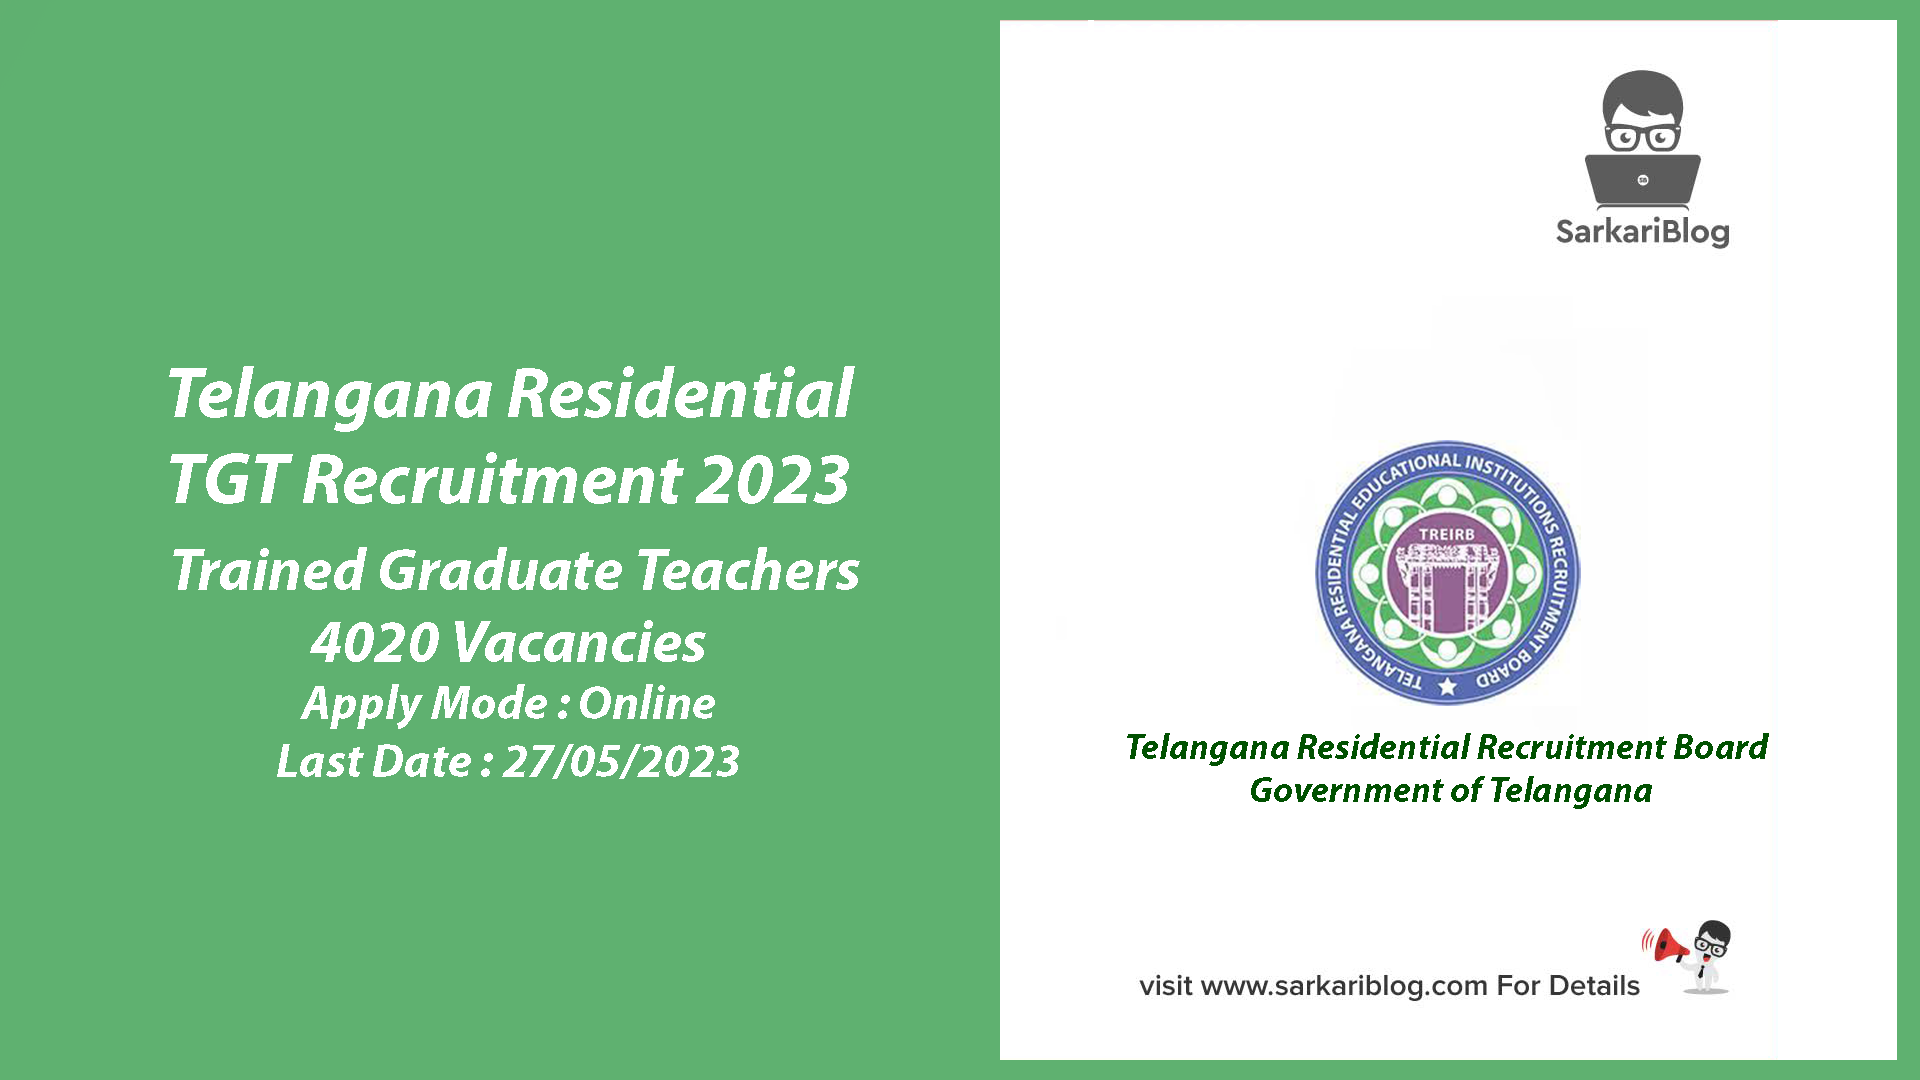 Telangana Residential TGT Recruitment 2023